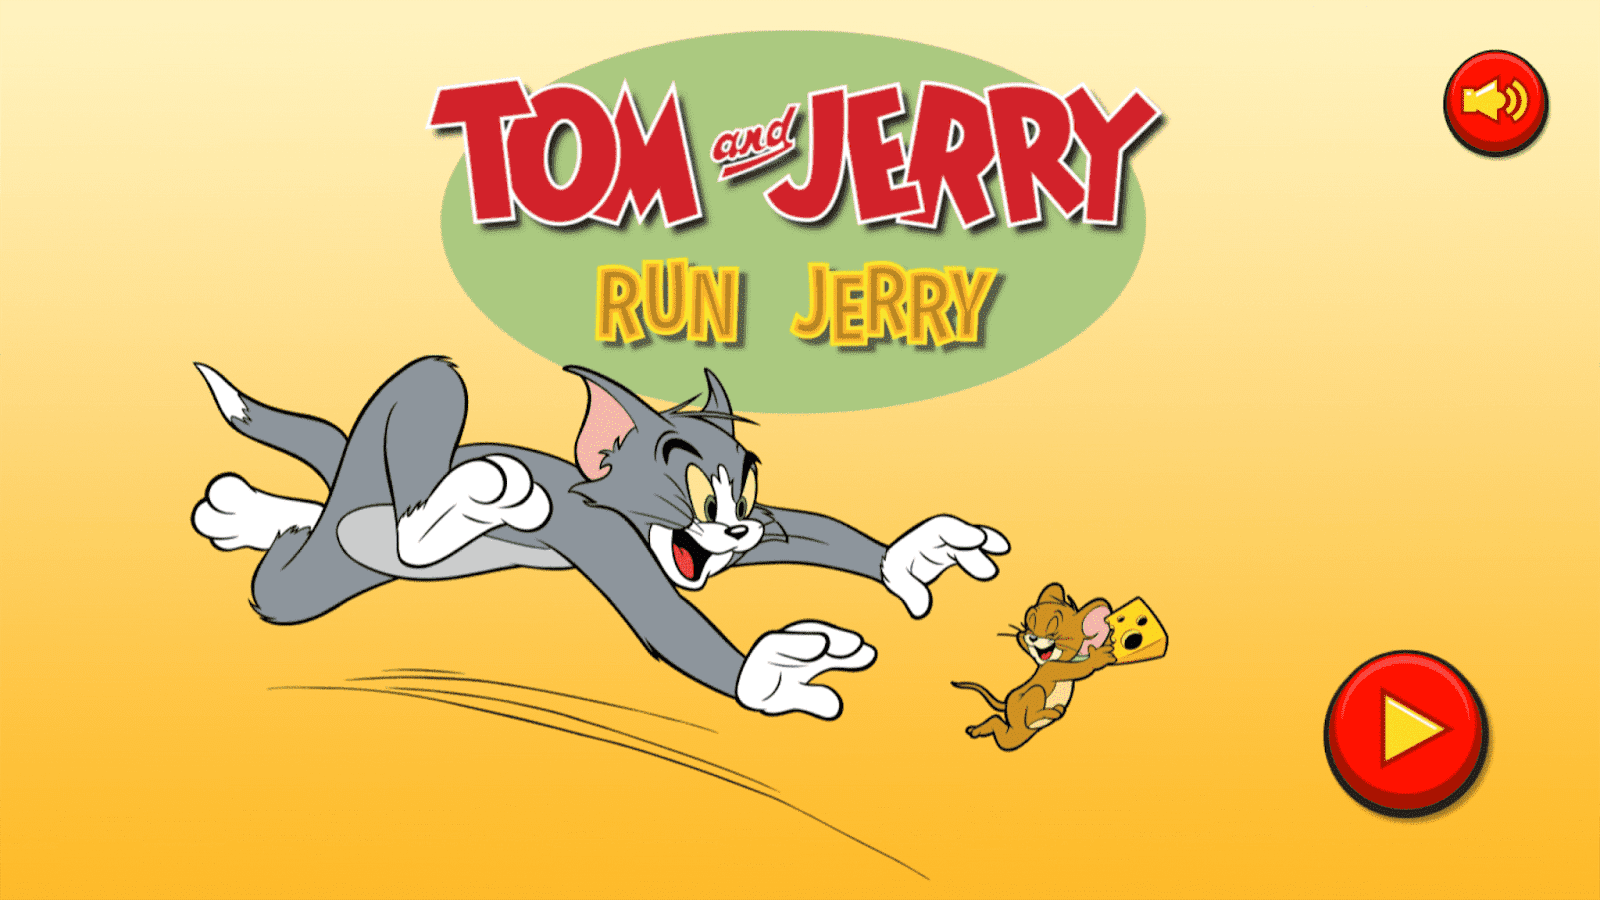 Том игра ютуб. Том и Джерри. Том и Джерри Джерри. Том и Джерри игра. Том и Джерри бегут.